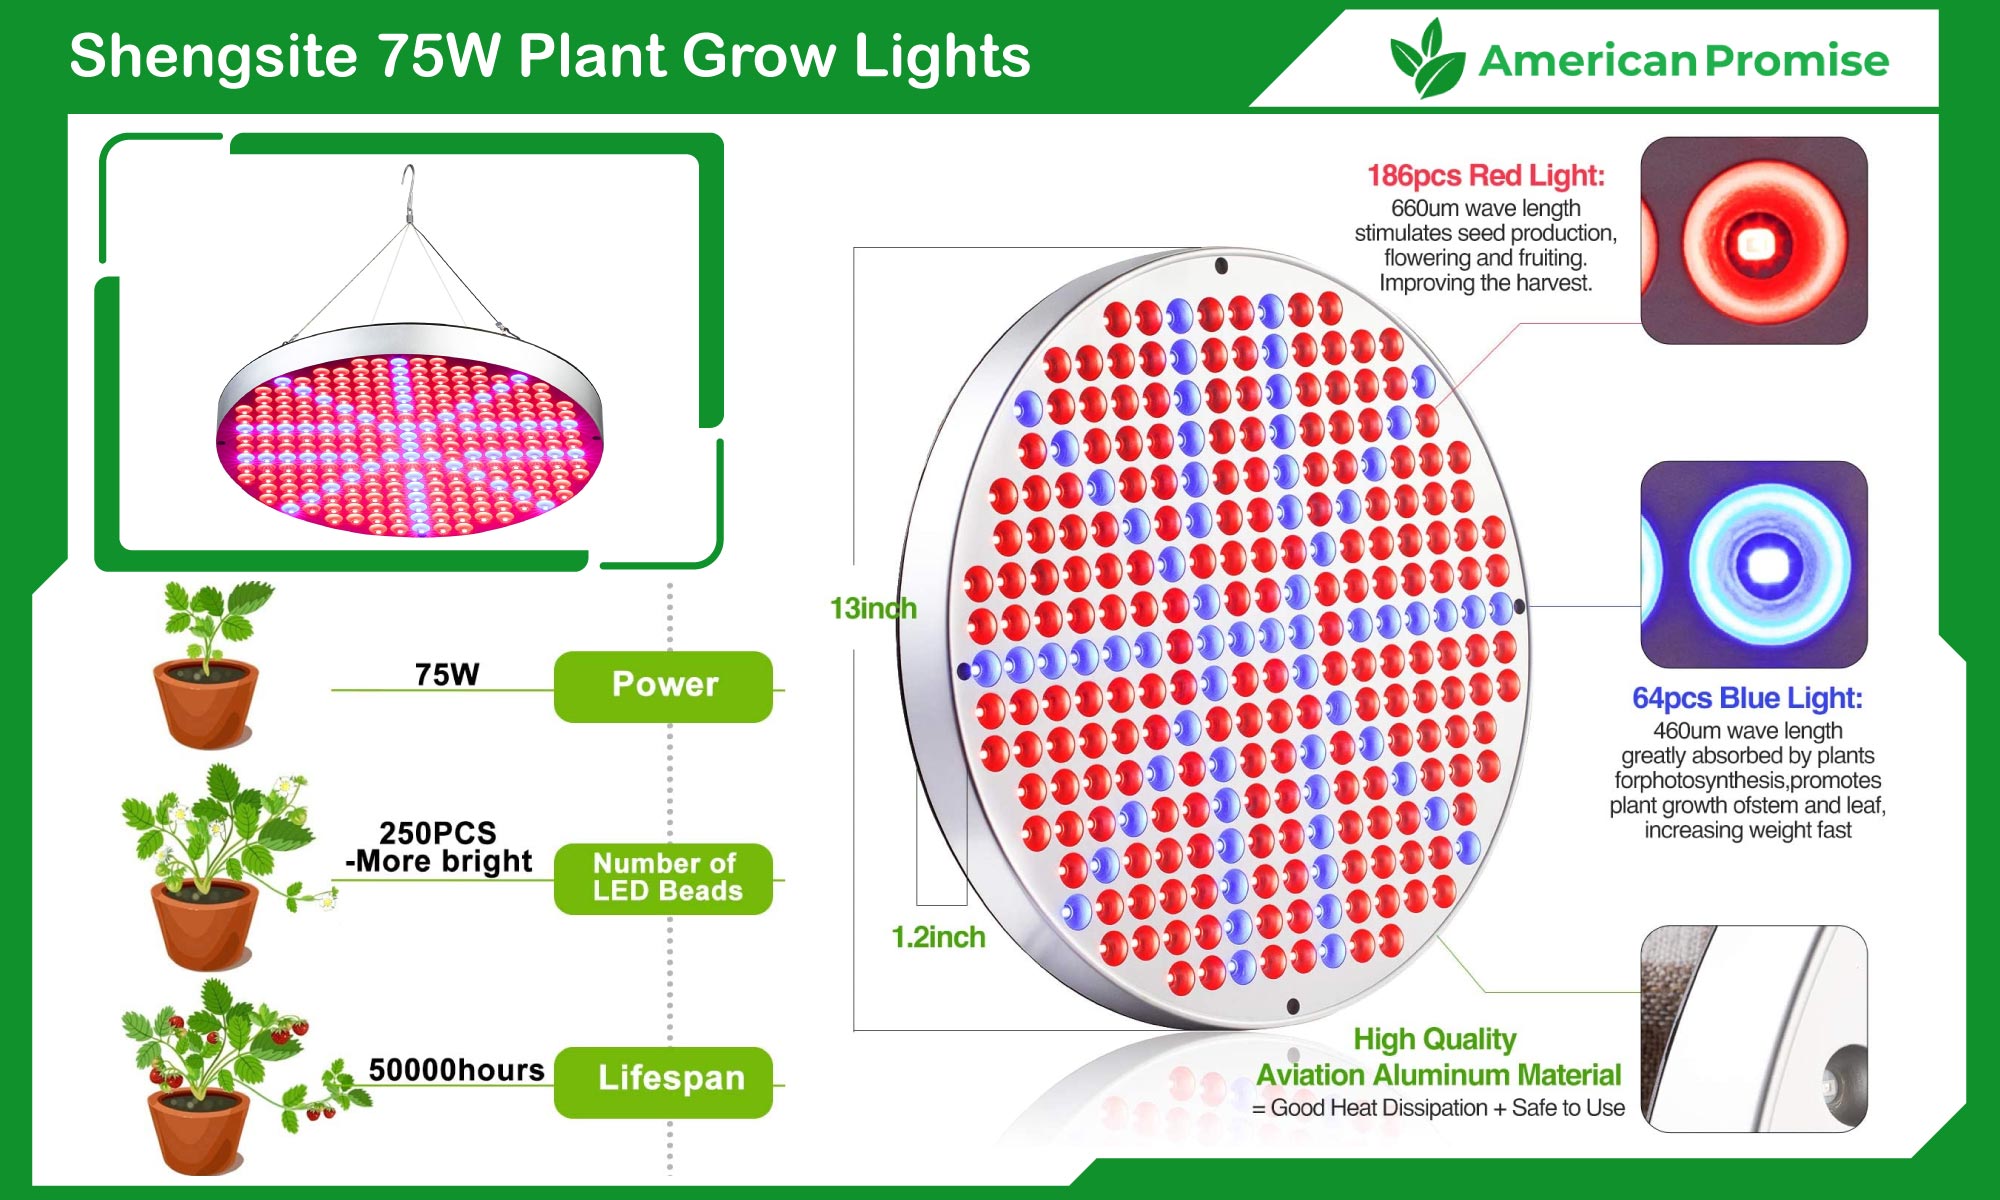 Shengsite 75W Plant Grow Lights